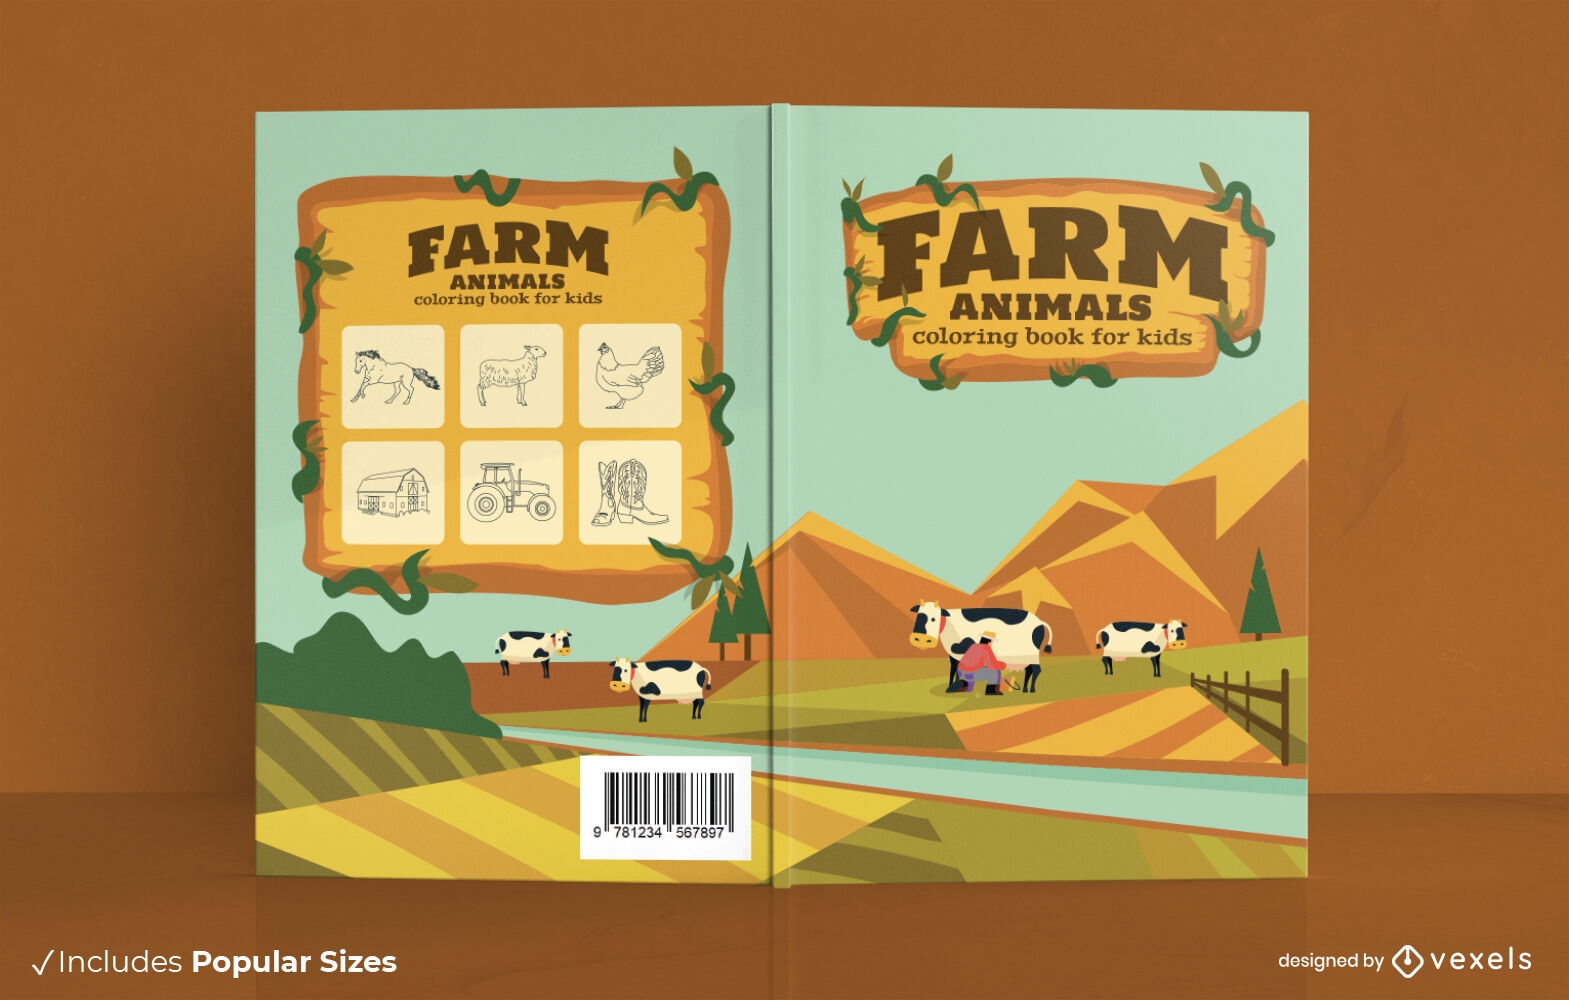 Farm animals coloring book cover design